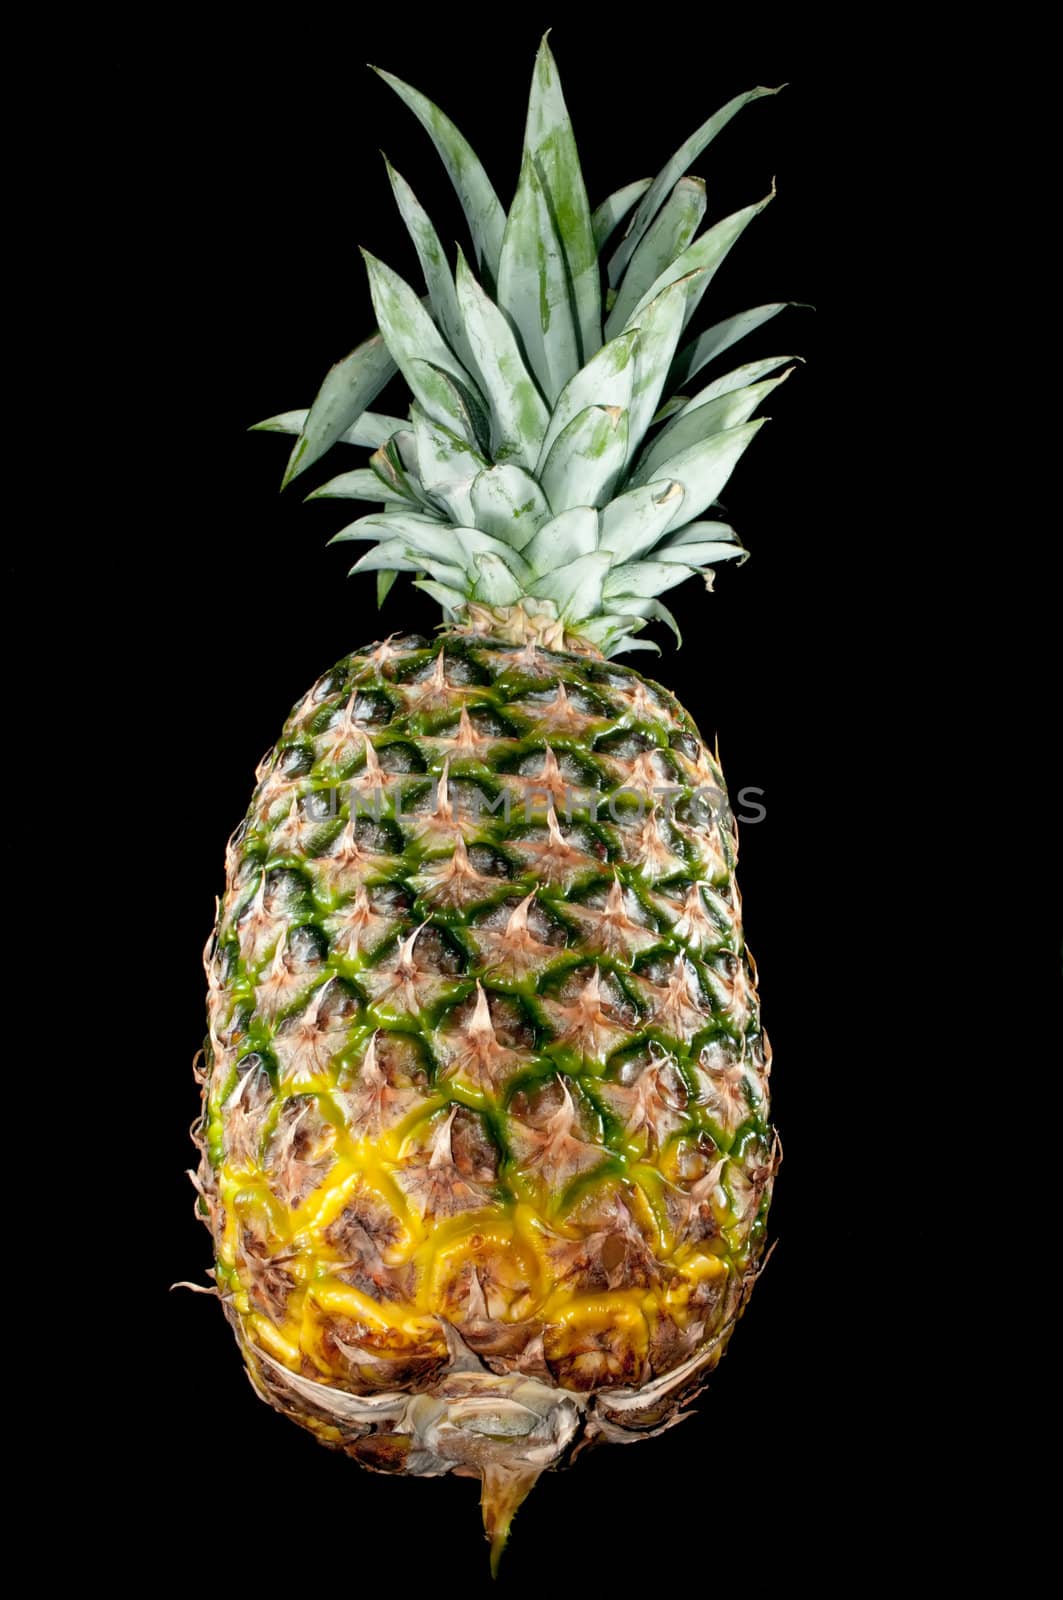 Pineapple fruit isolated on black background